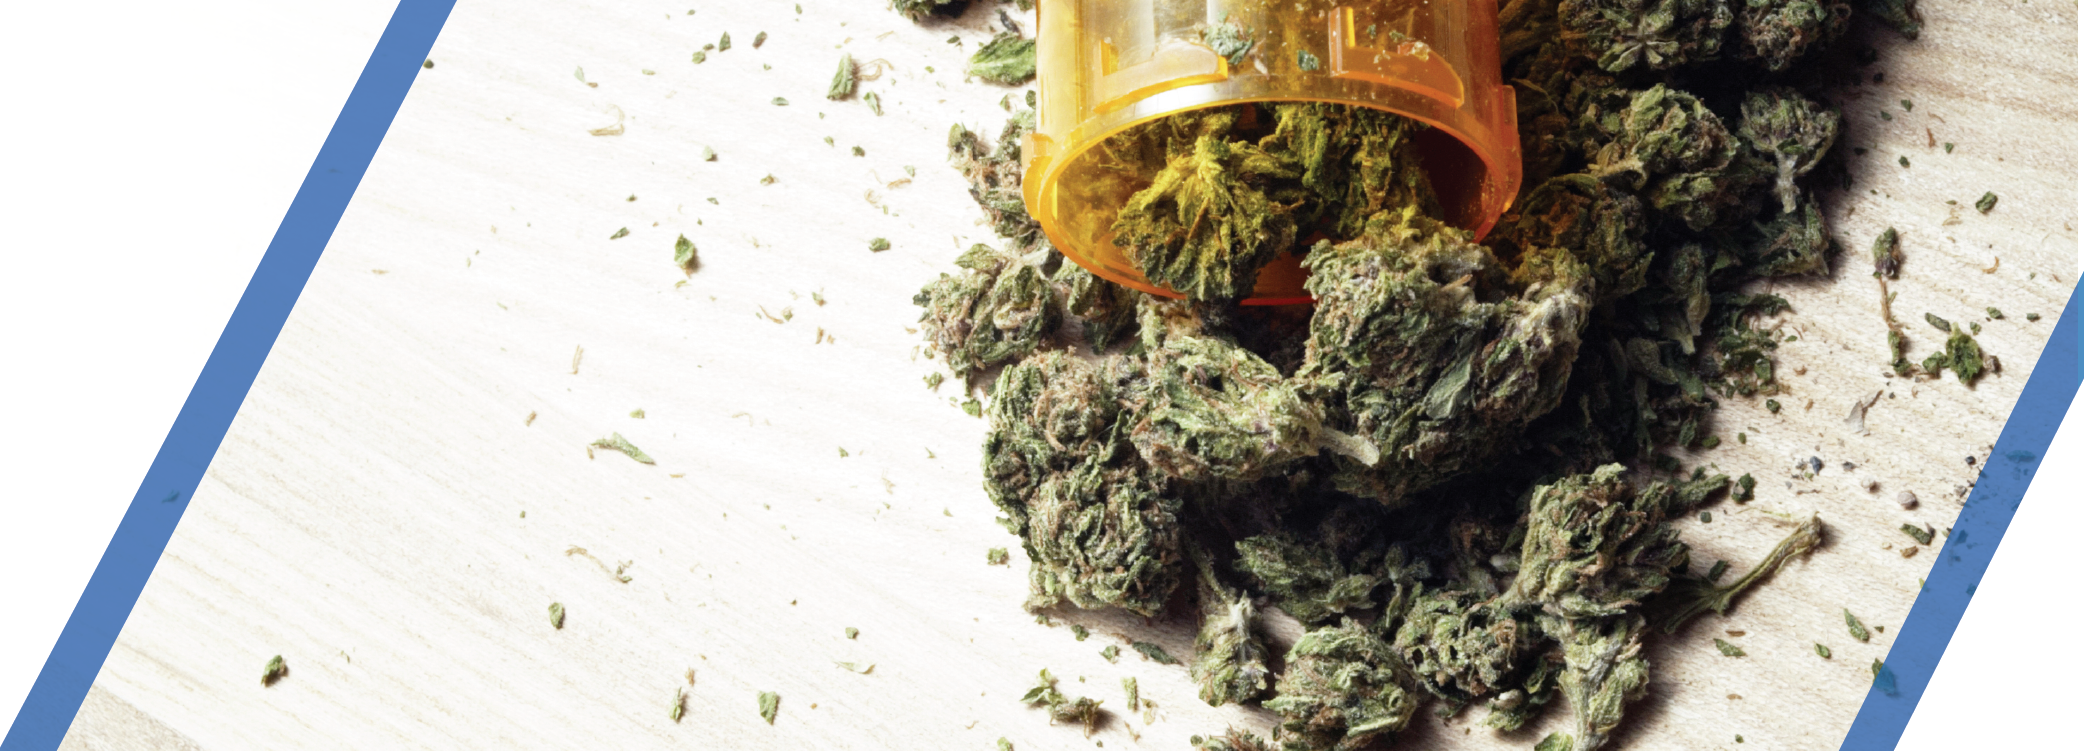 Medical Marijuana Will Soon be Legal in Kentucky